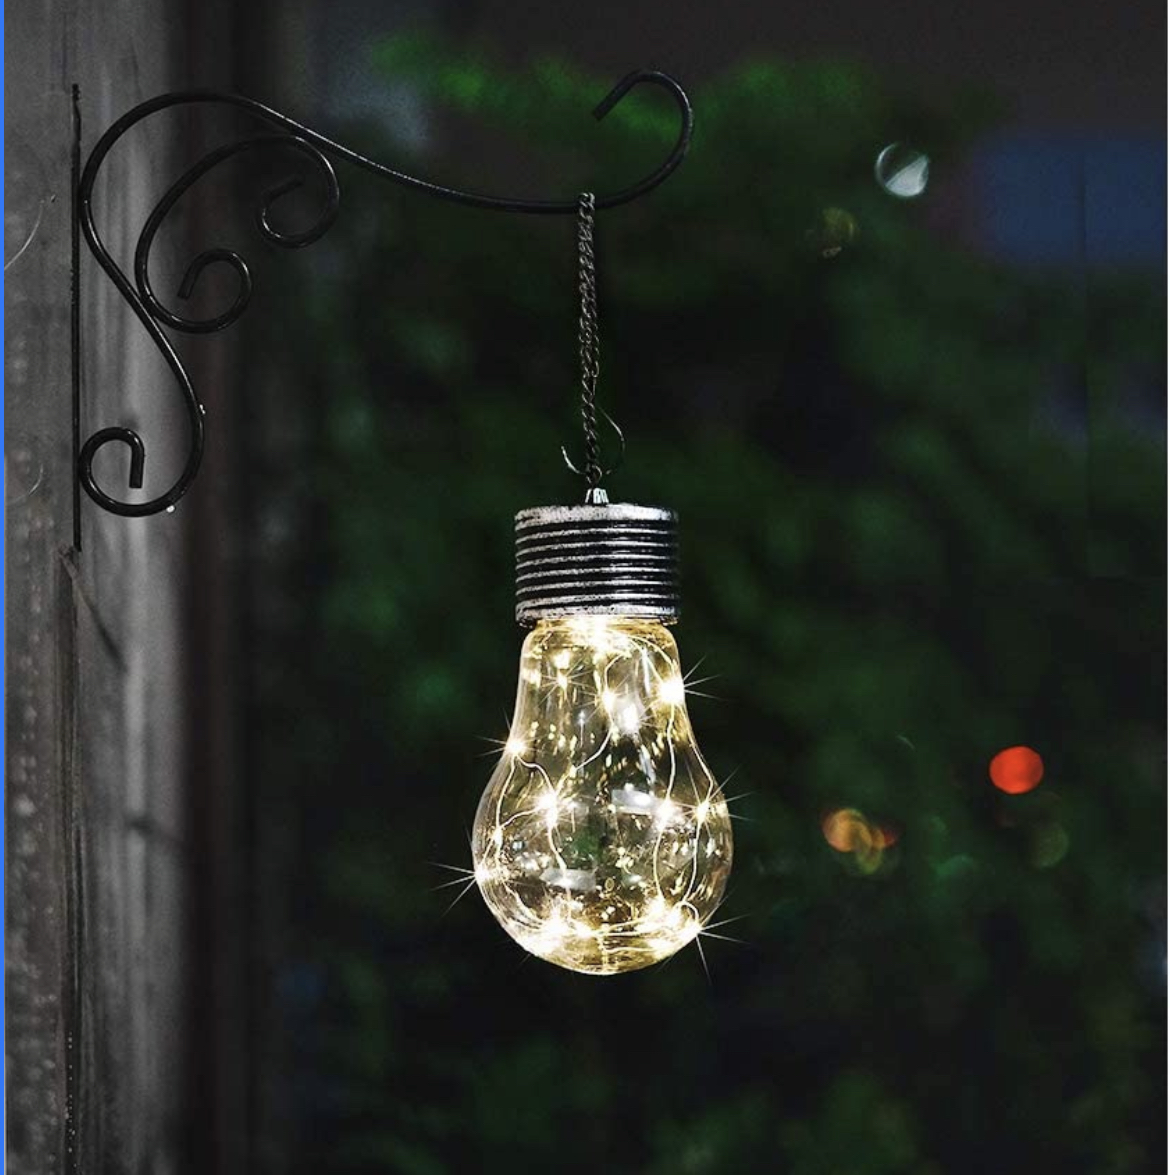 Light bulb with lights inside that look like fireflies